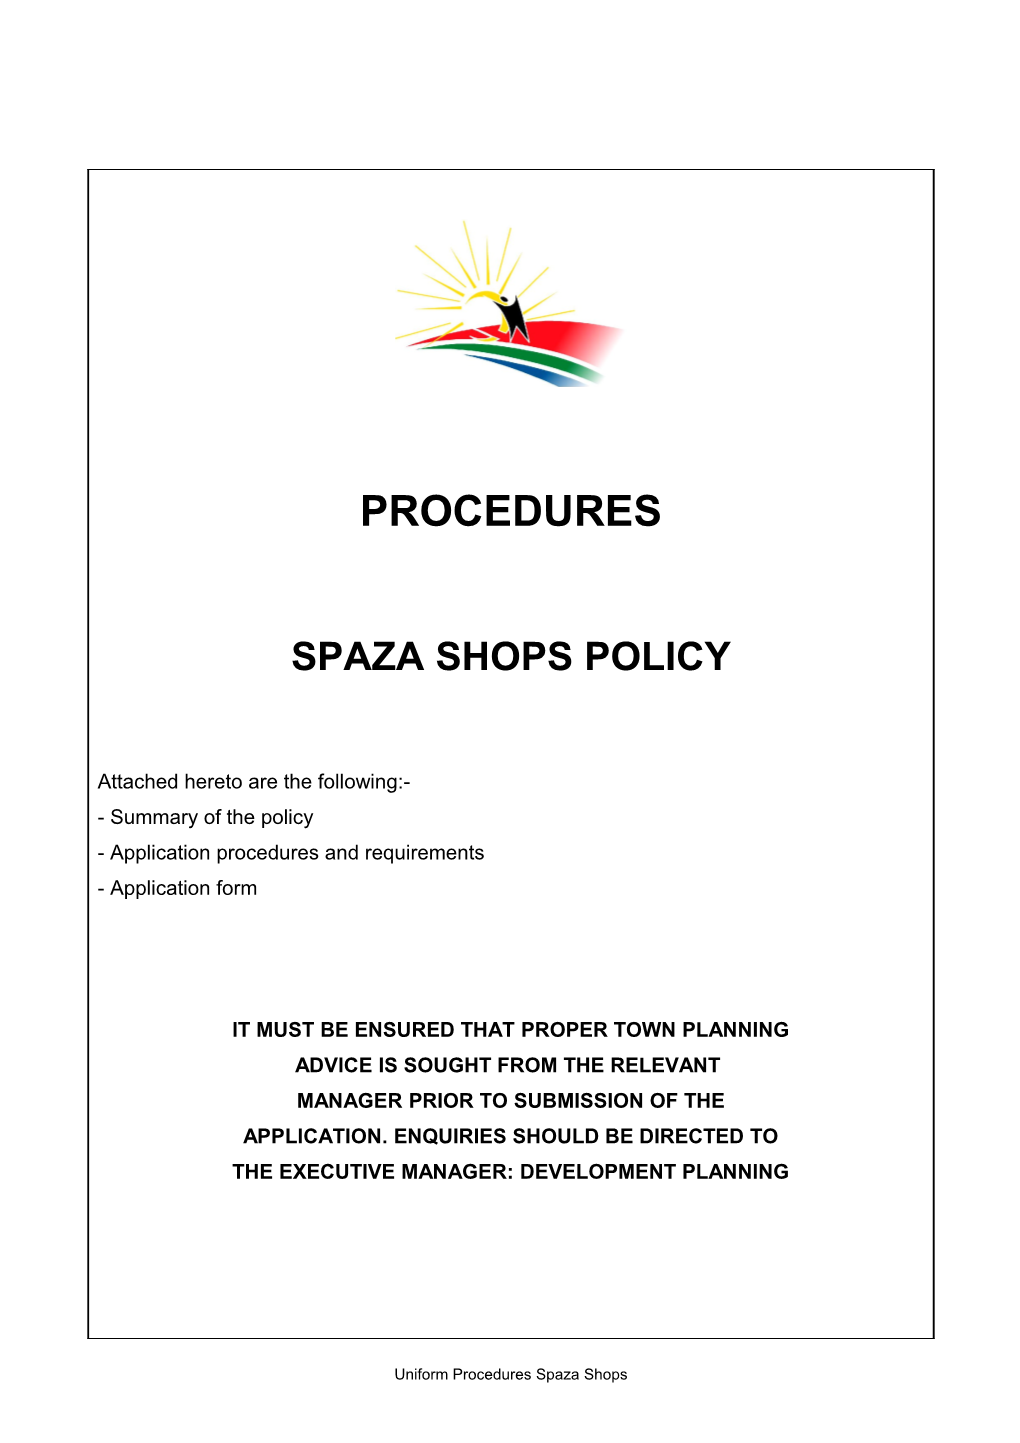 Uniform Procedures Spaza Shops